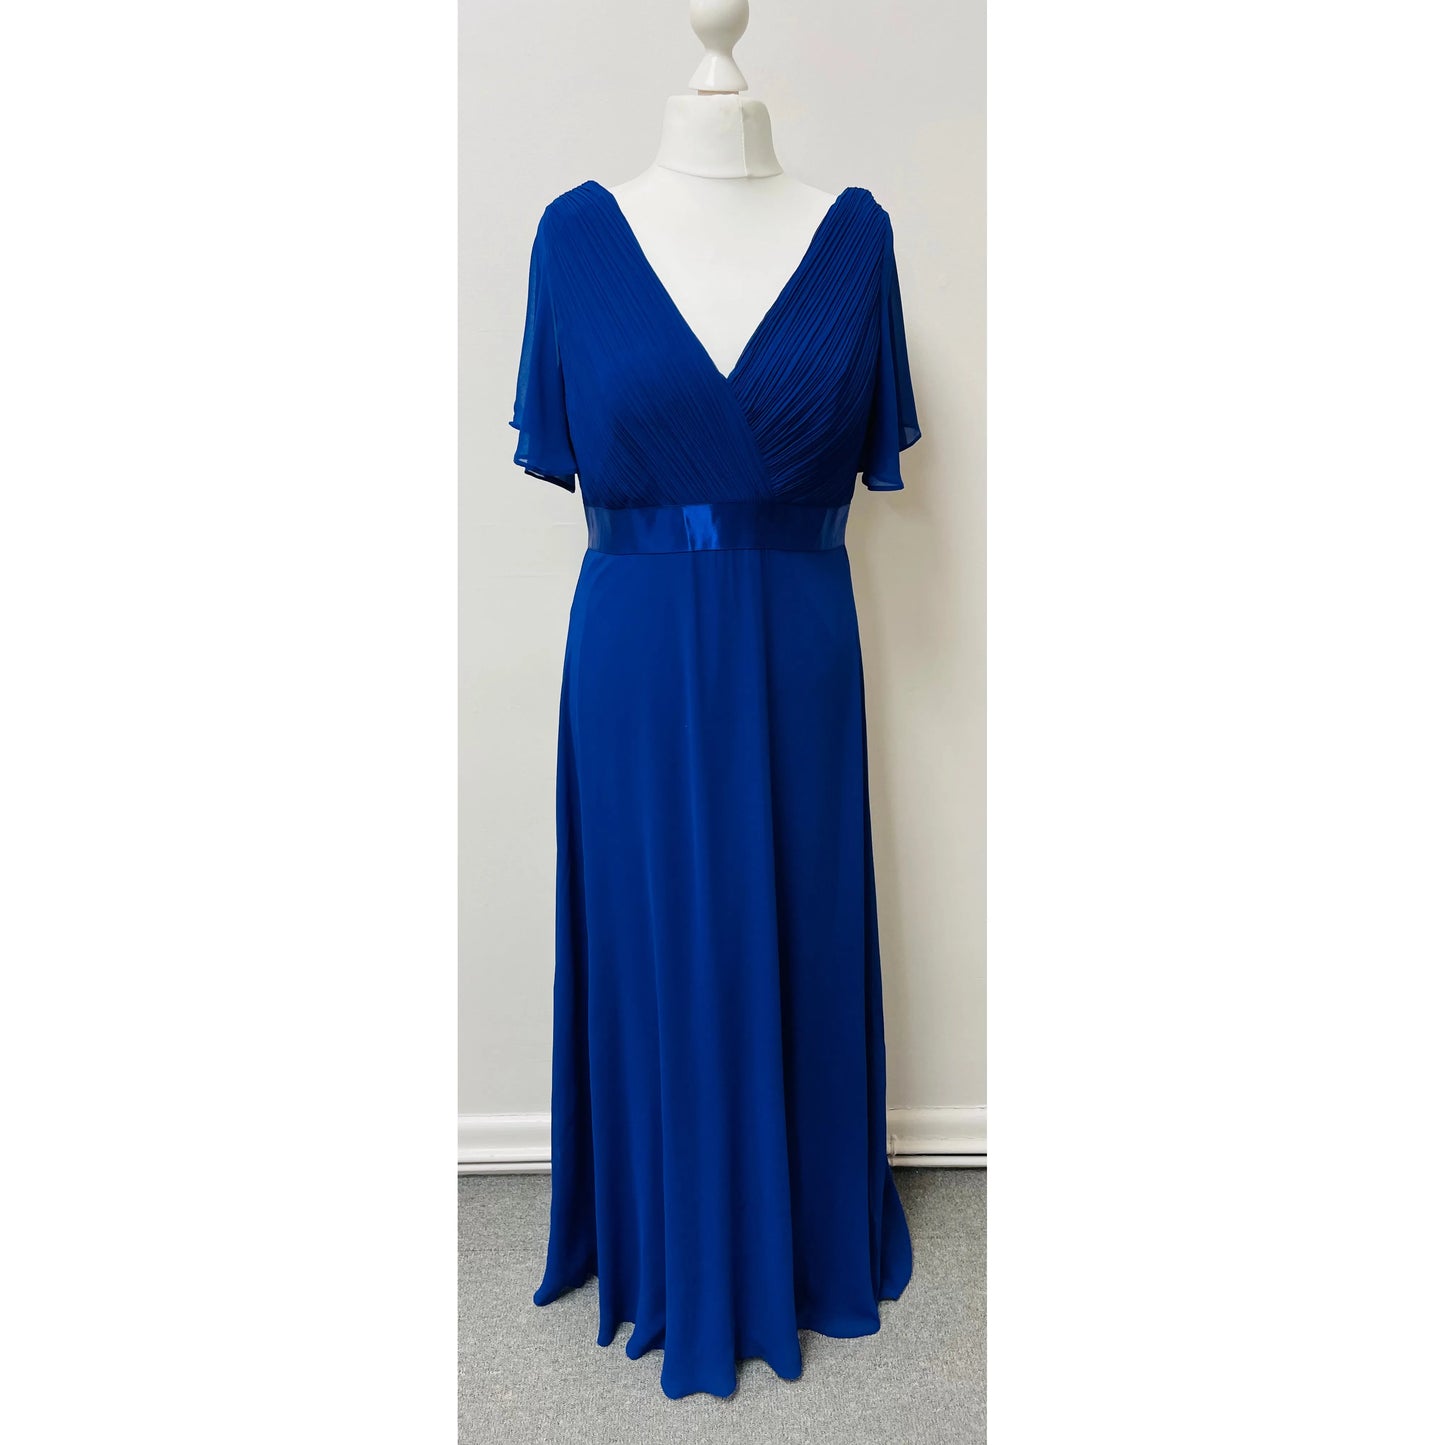 Ava Bridesmaid Dress - Bright Blue